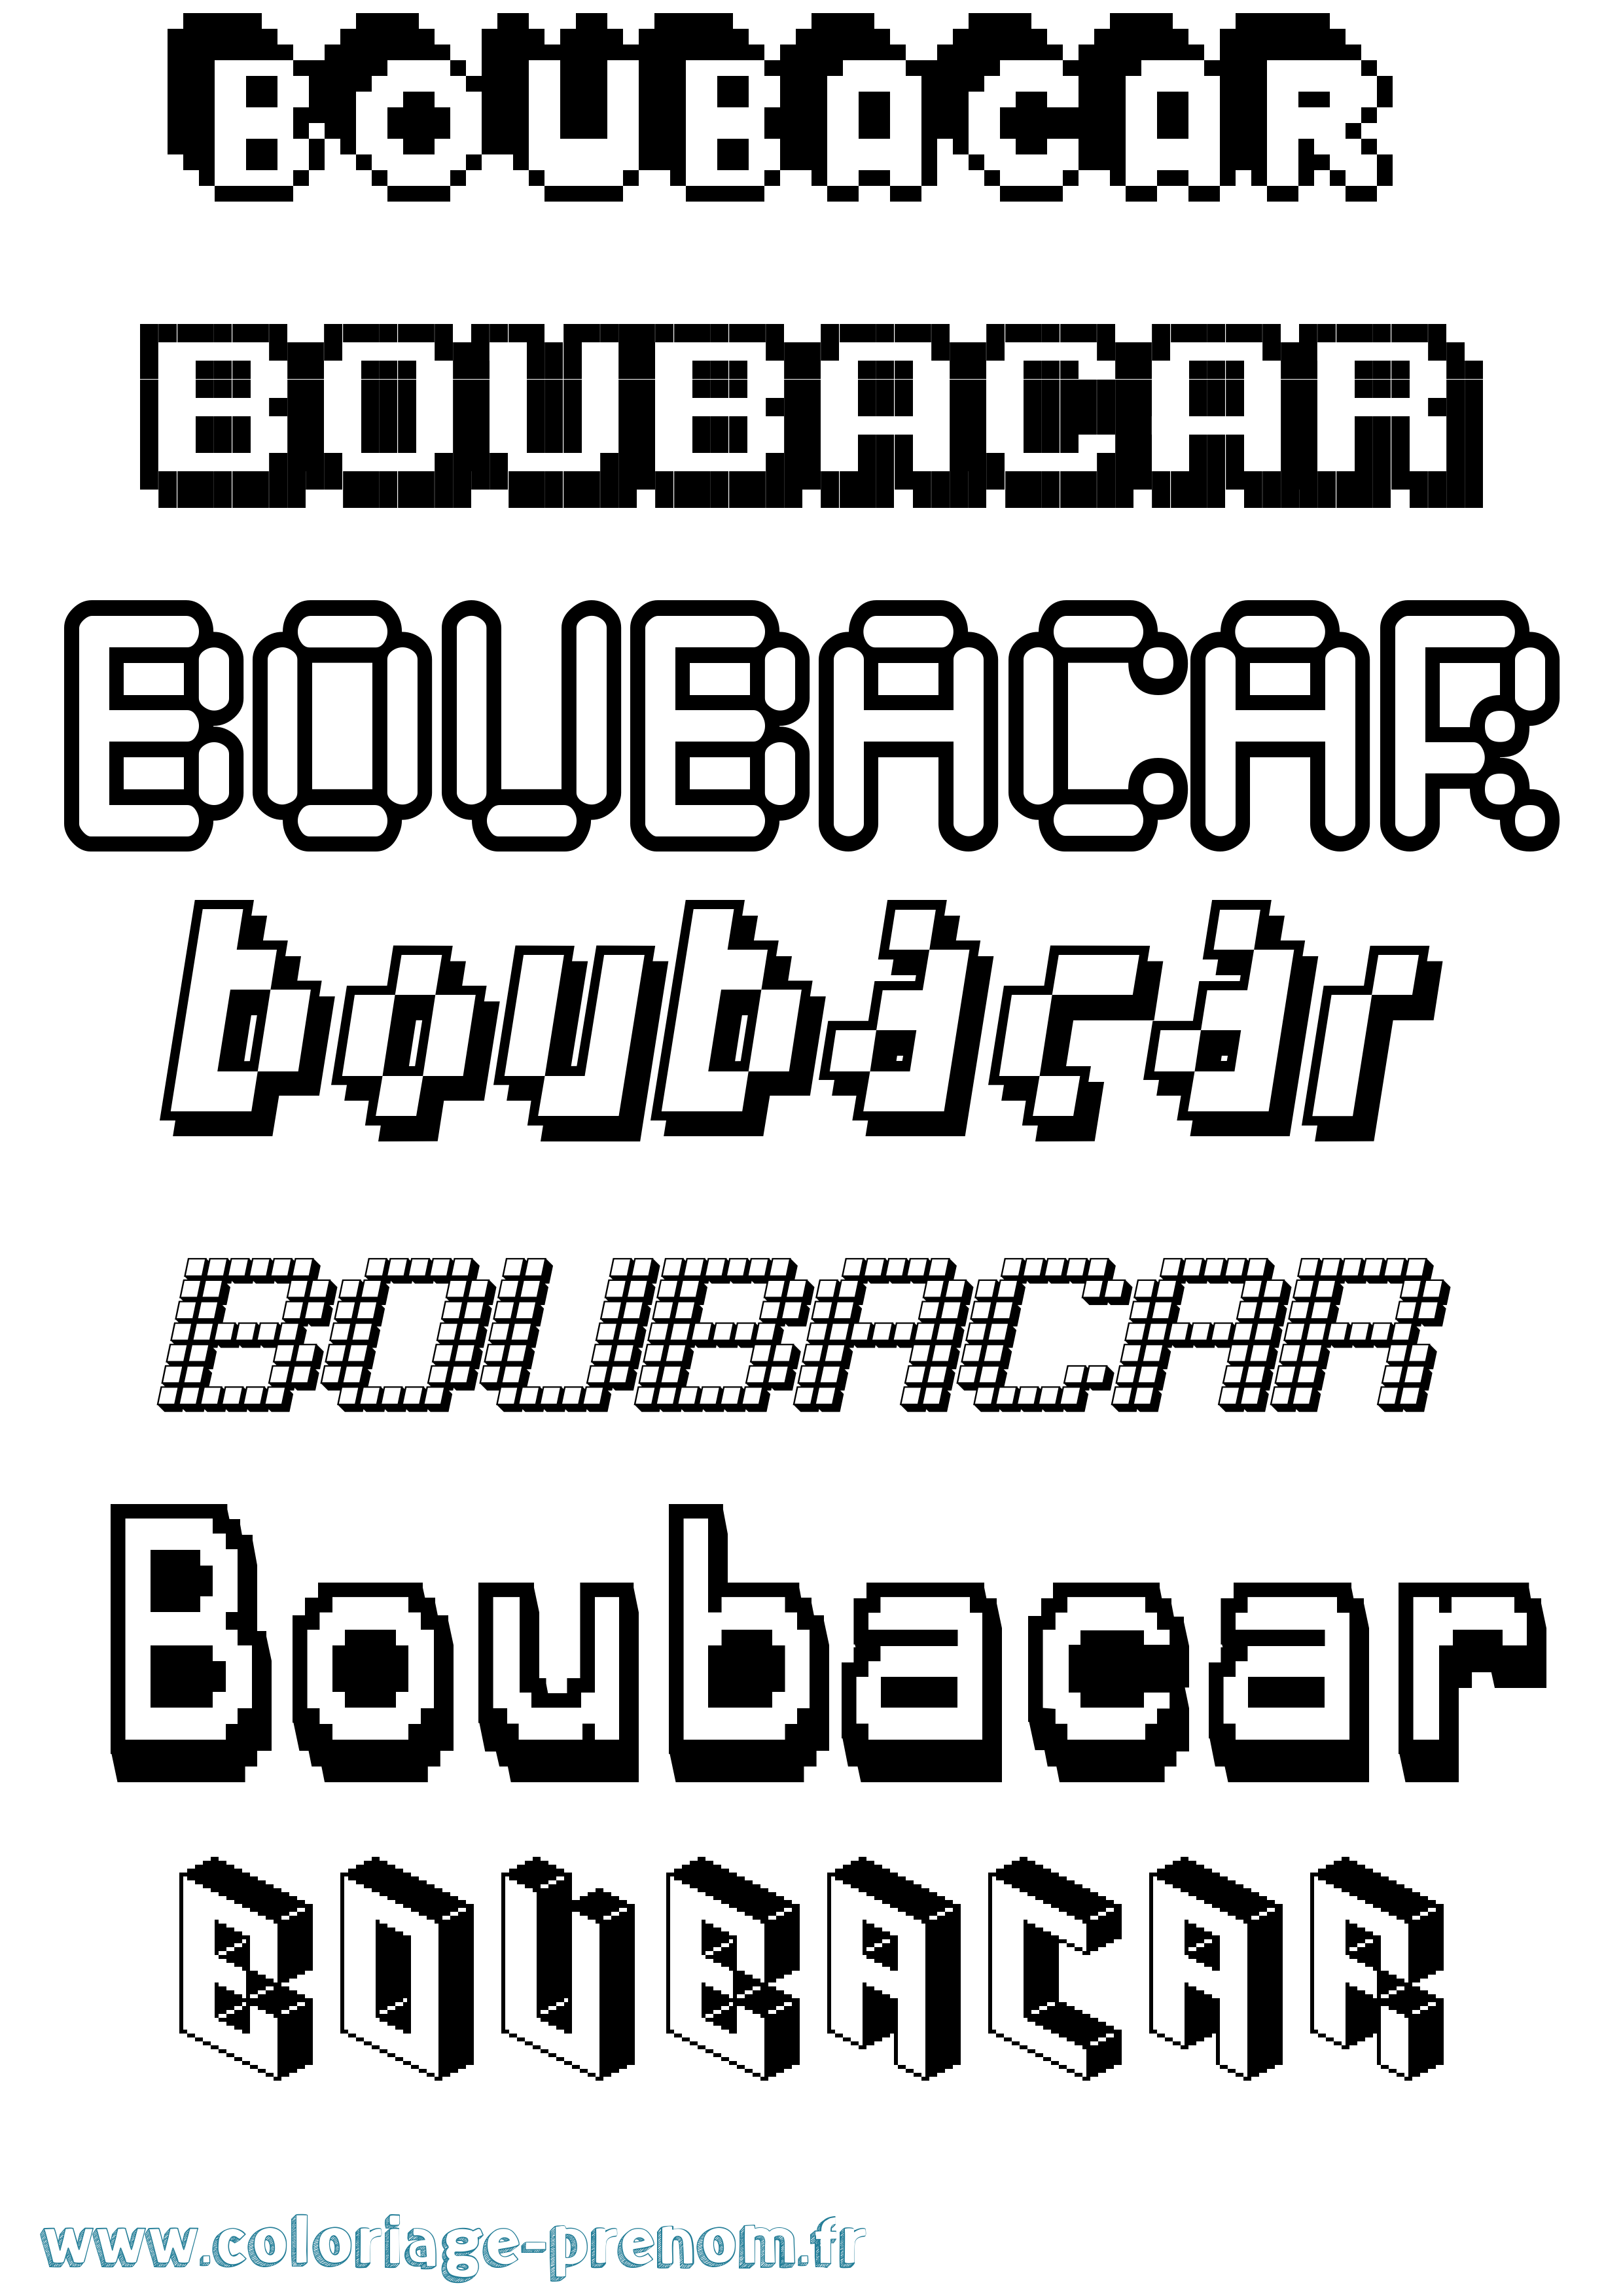 Coloriage prénom Boubacar